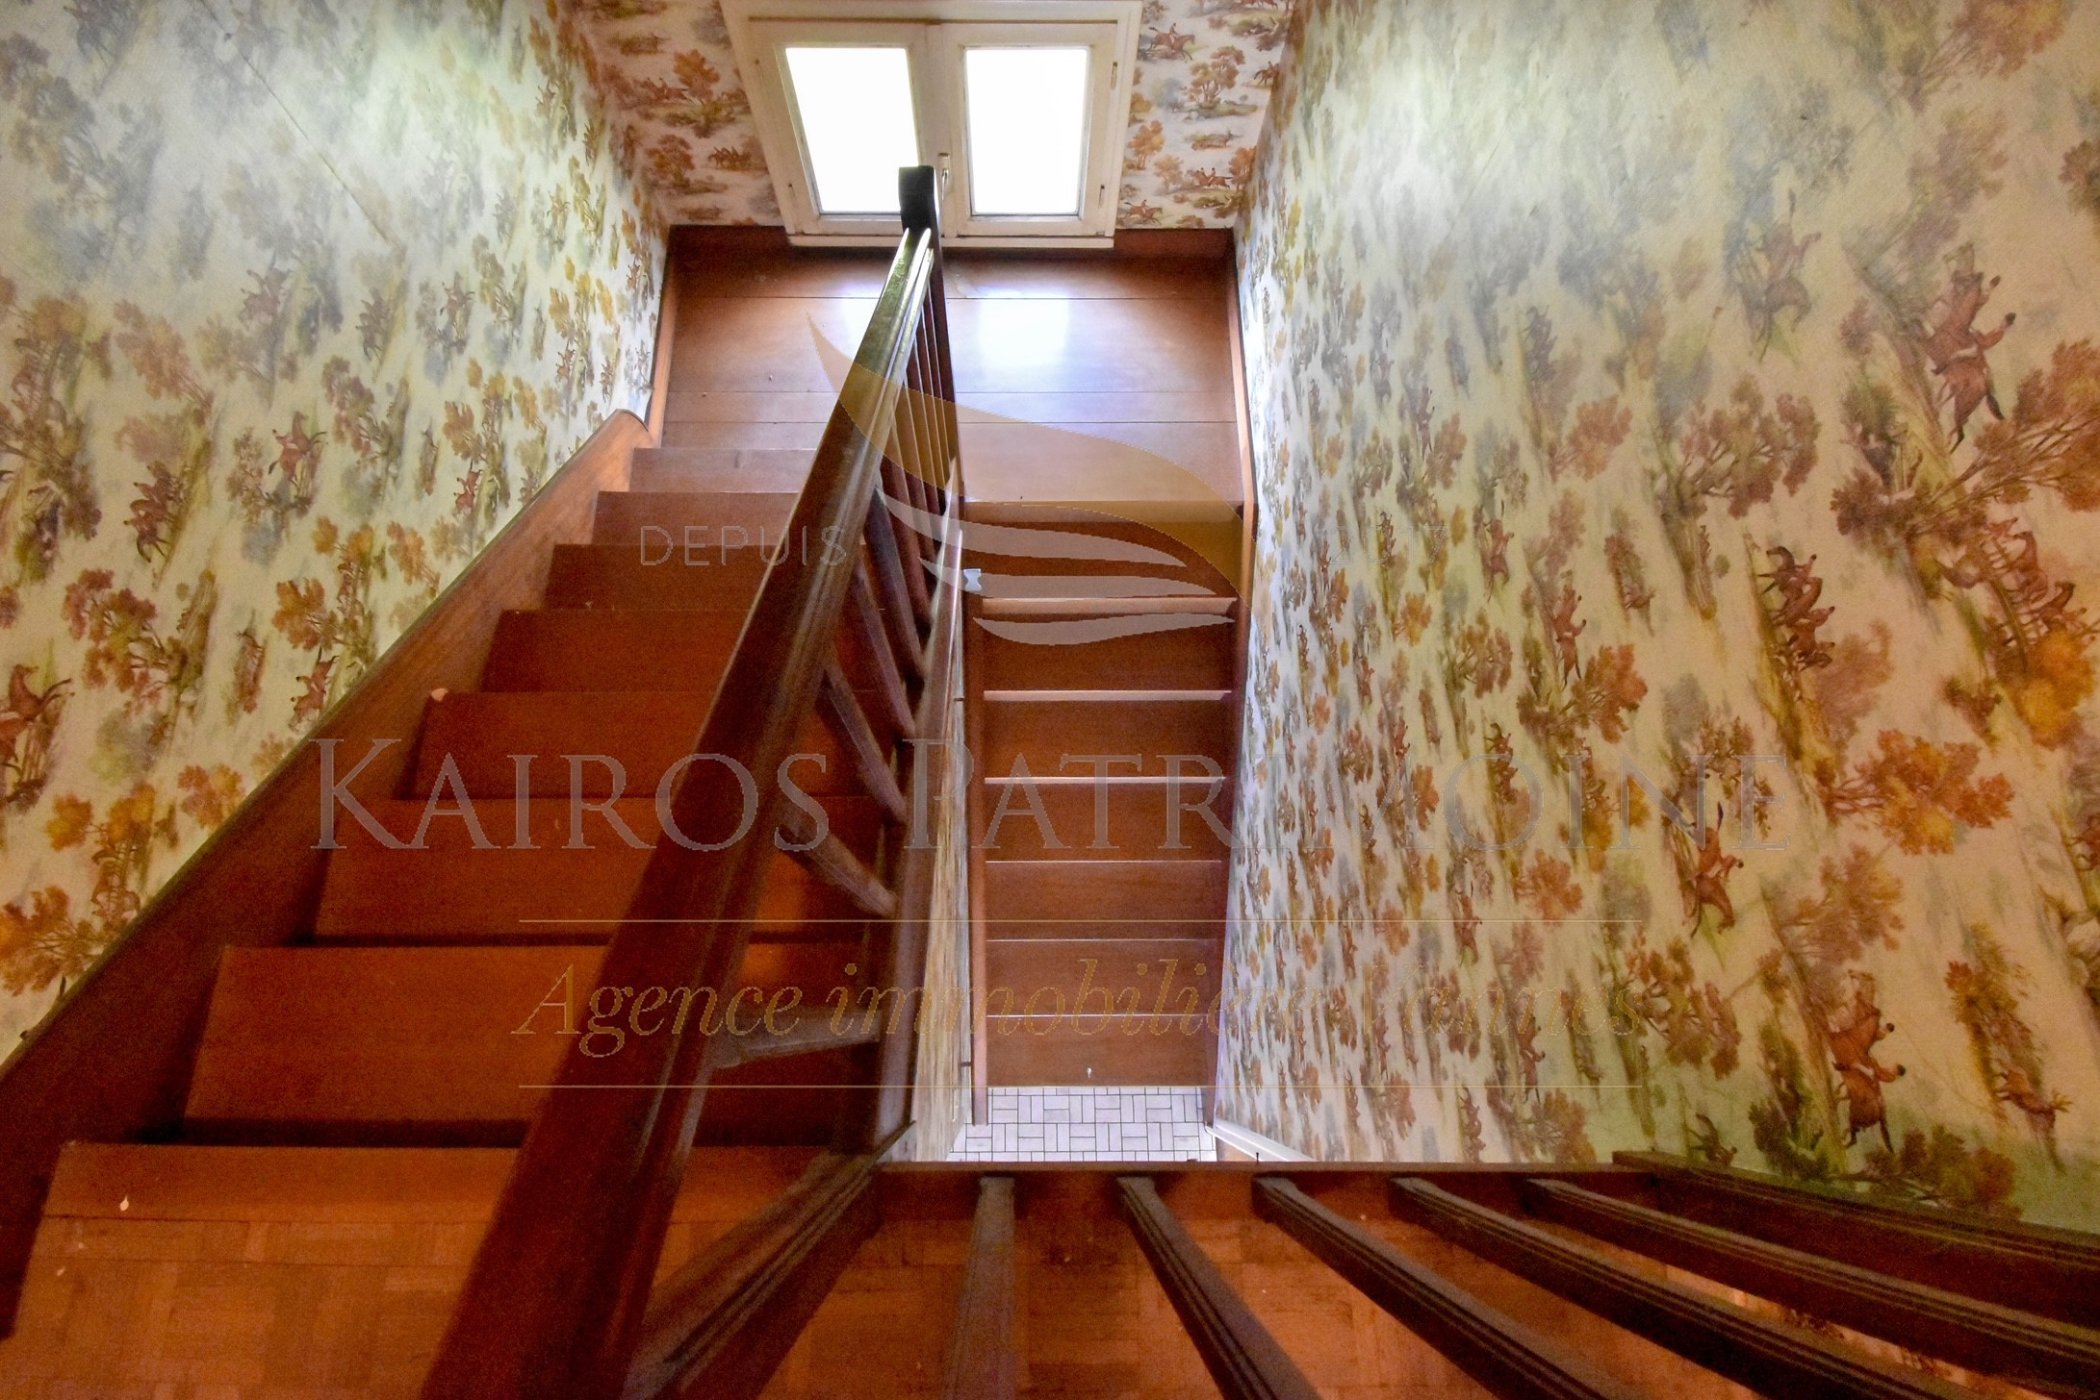 Achat vente maison Grand Champ Kairos patrimoine Escalier